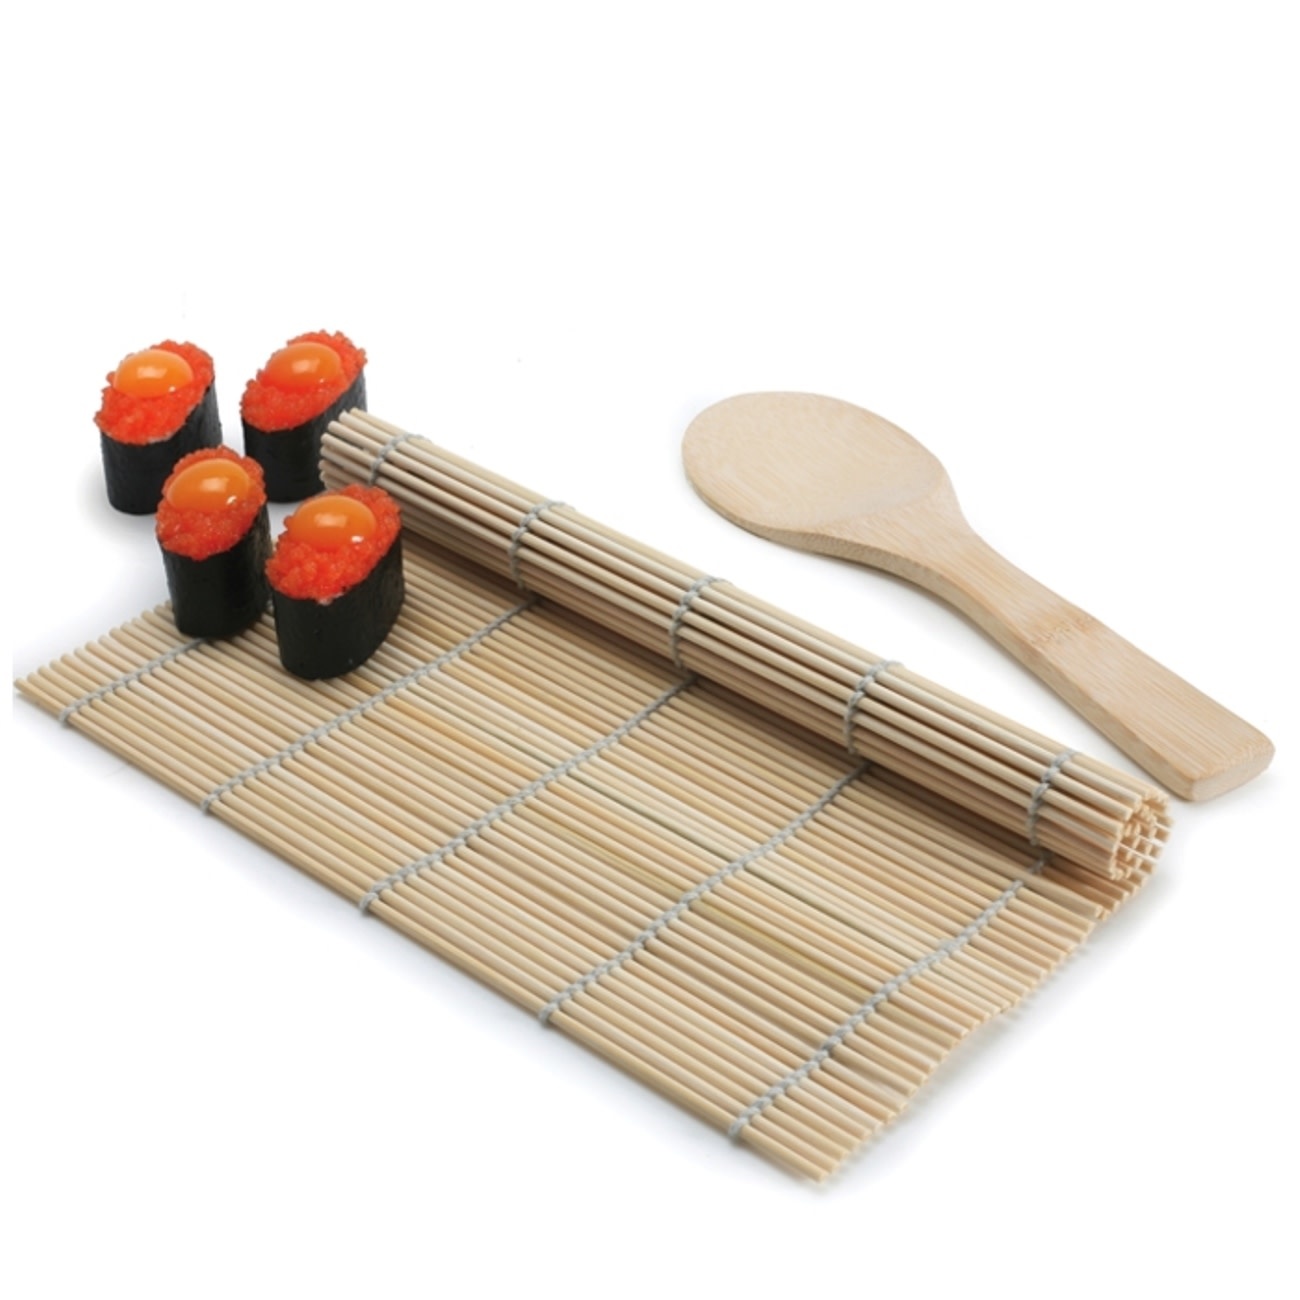 Danesco Zen Cuizine Bamboo Sushi Making Kit